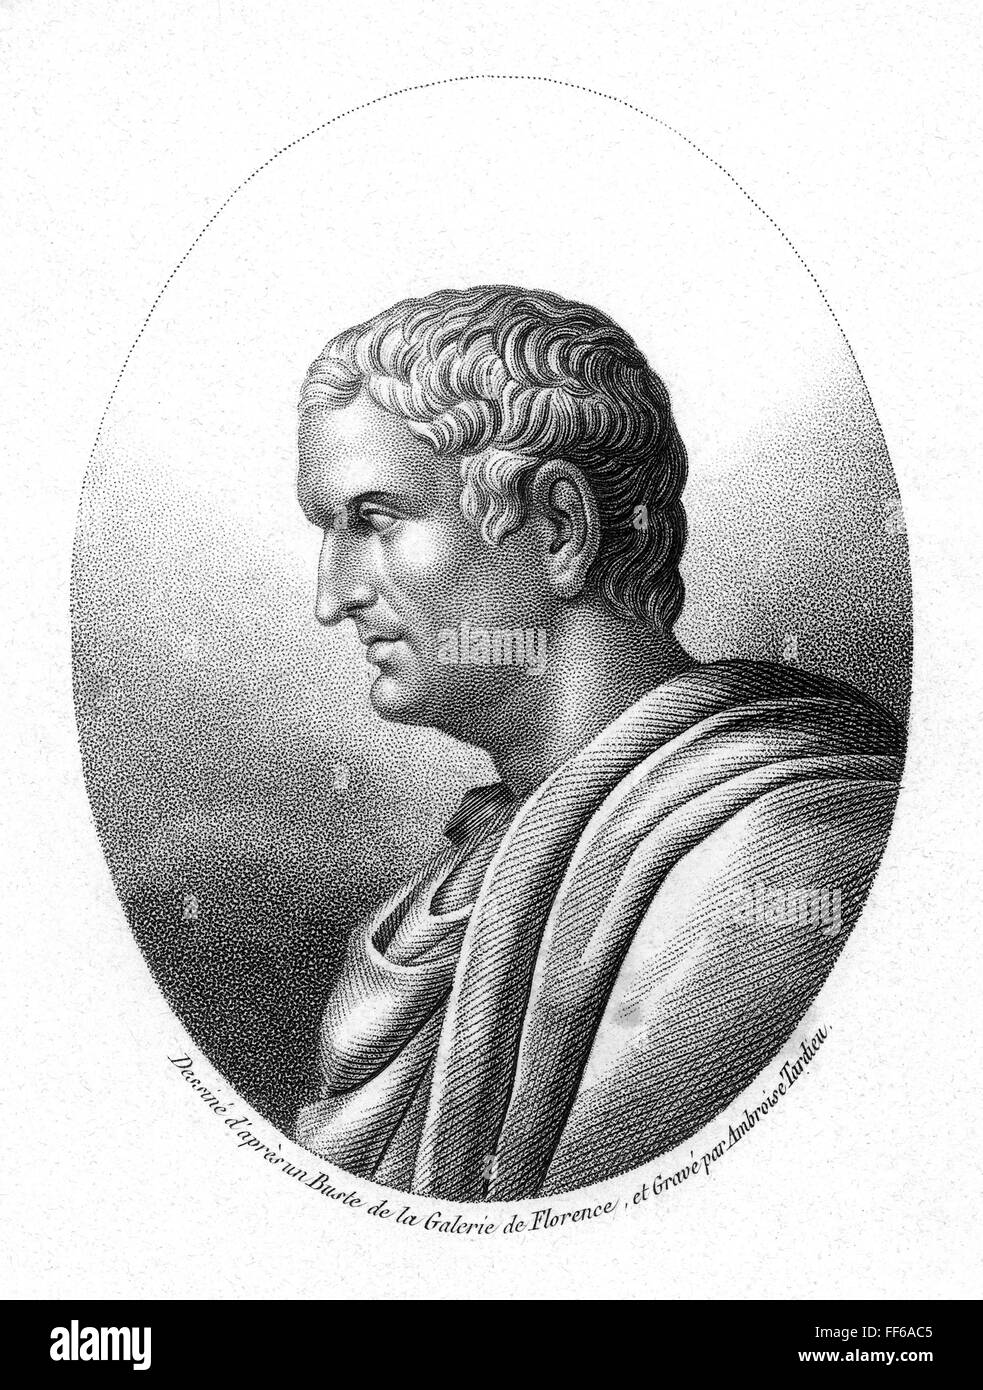 who was marcus antonius